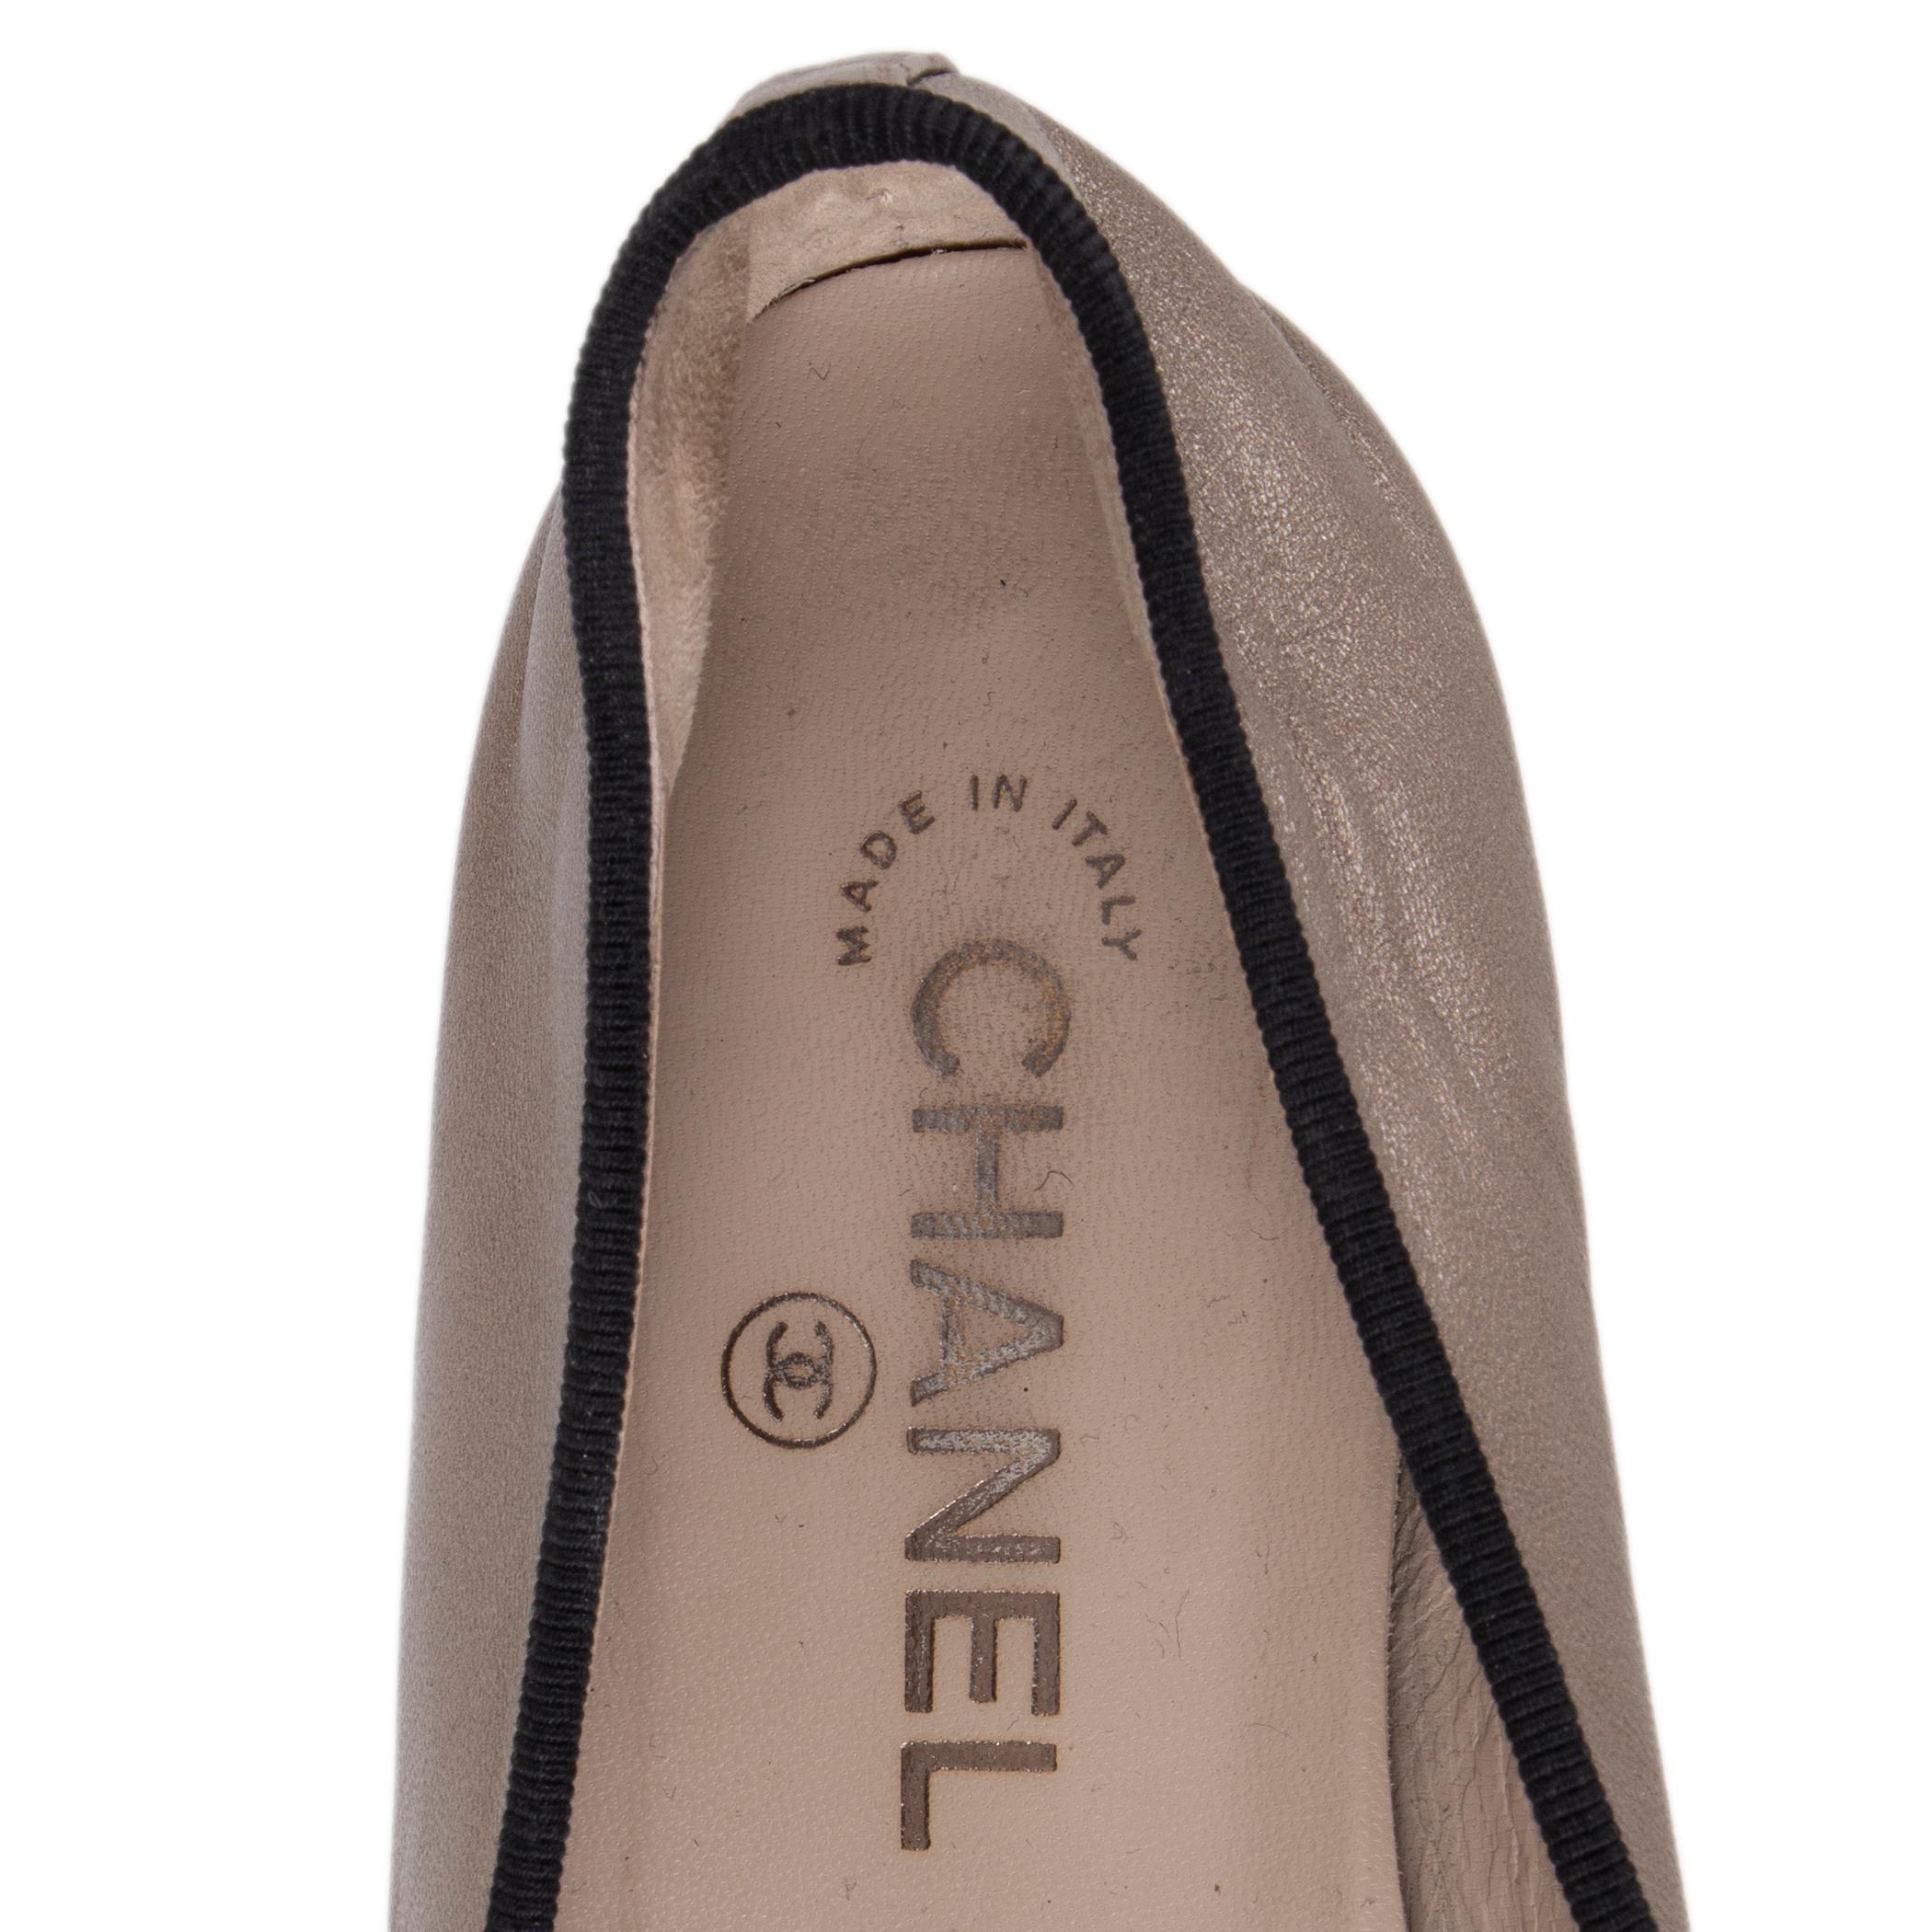 Beige CHANEL metallic beige leather Ballet Flats Shoes 39.5